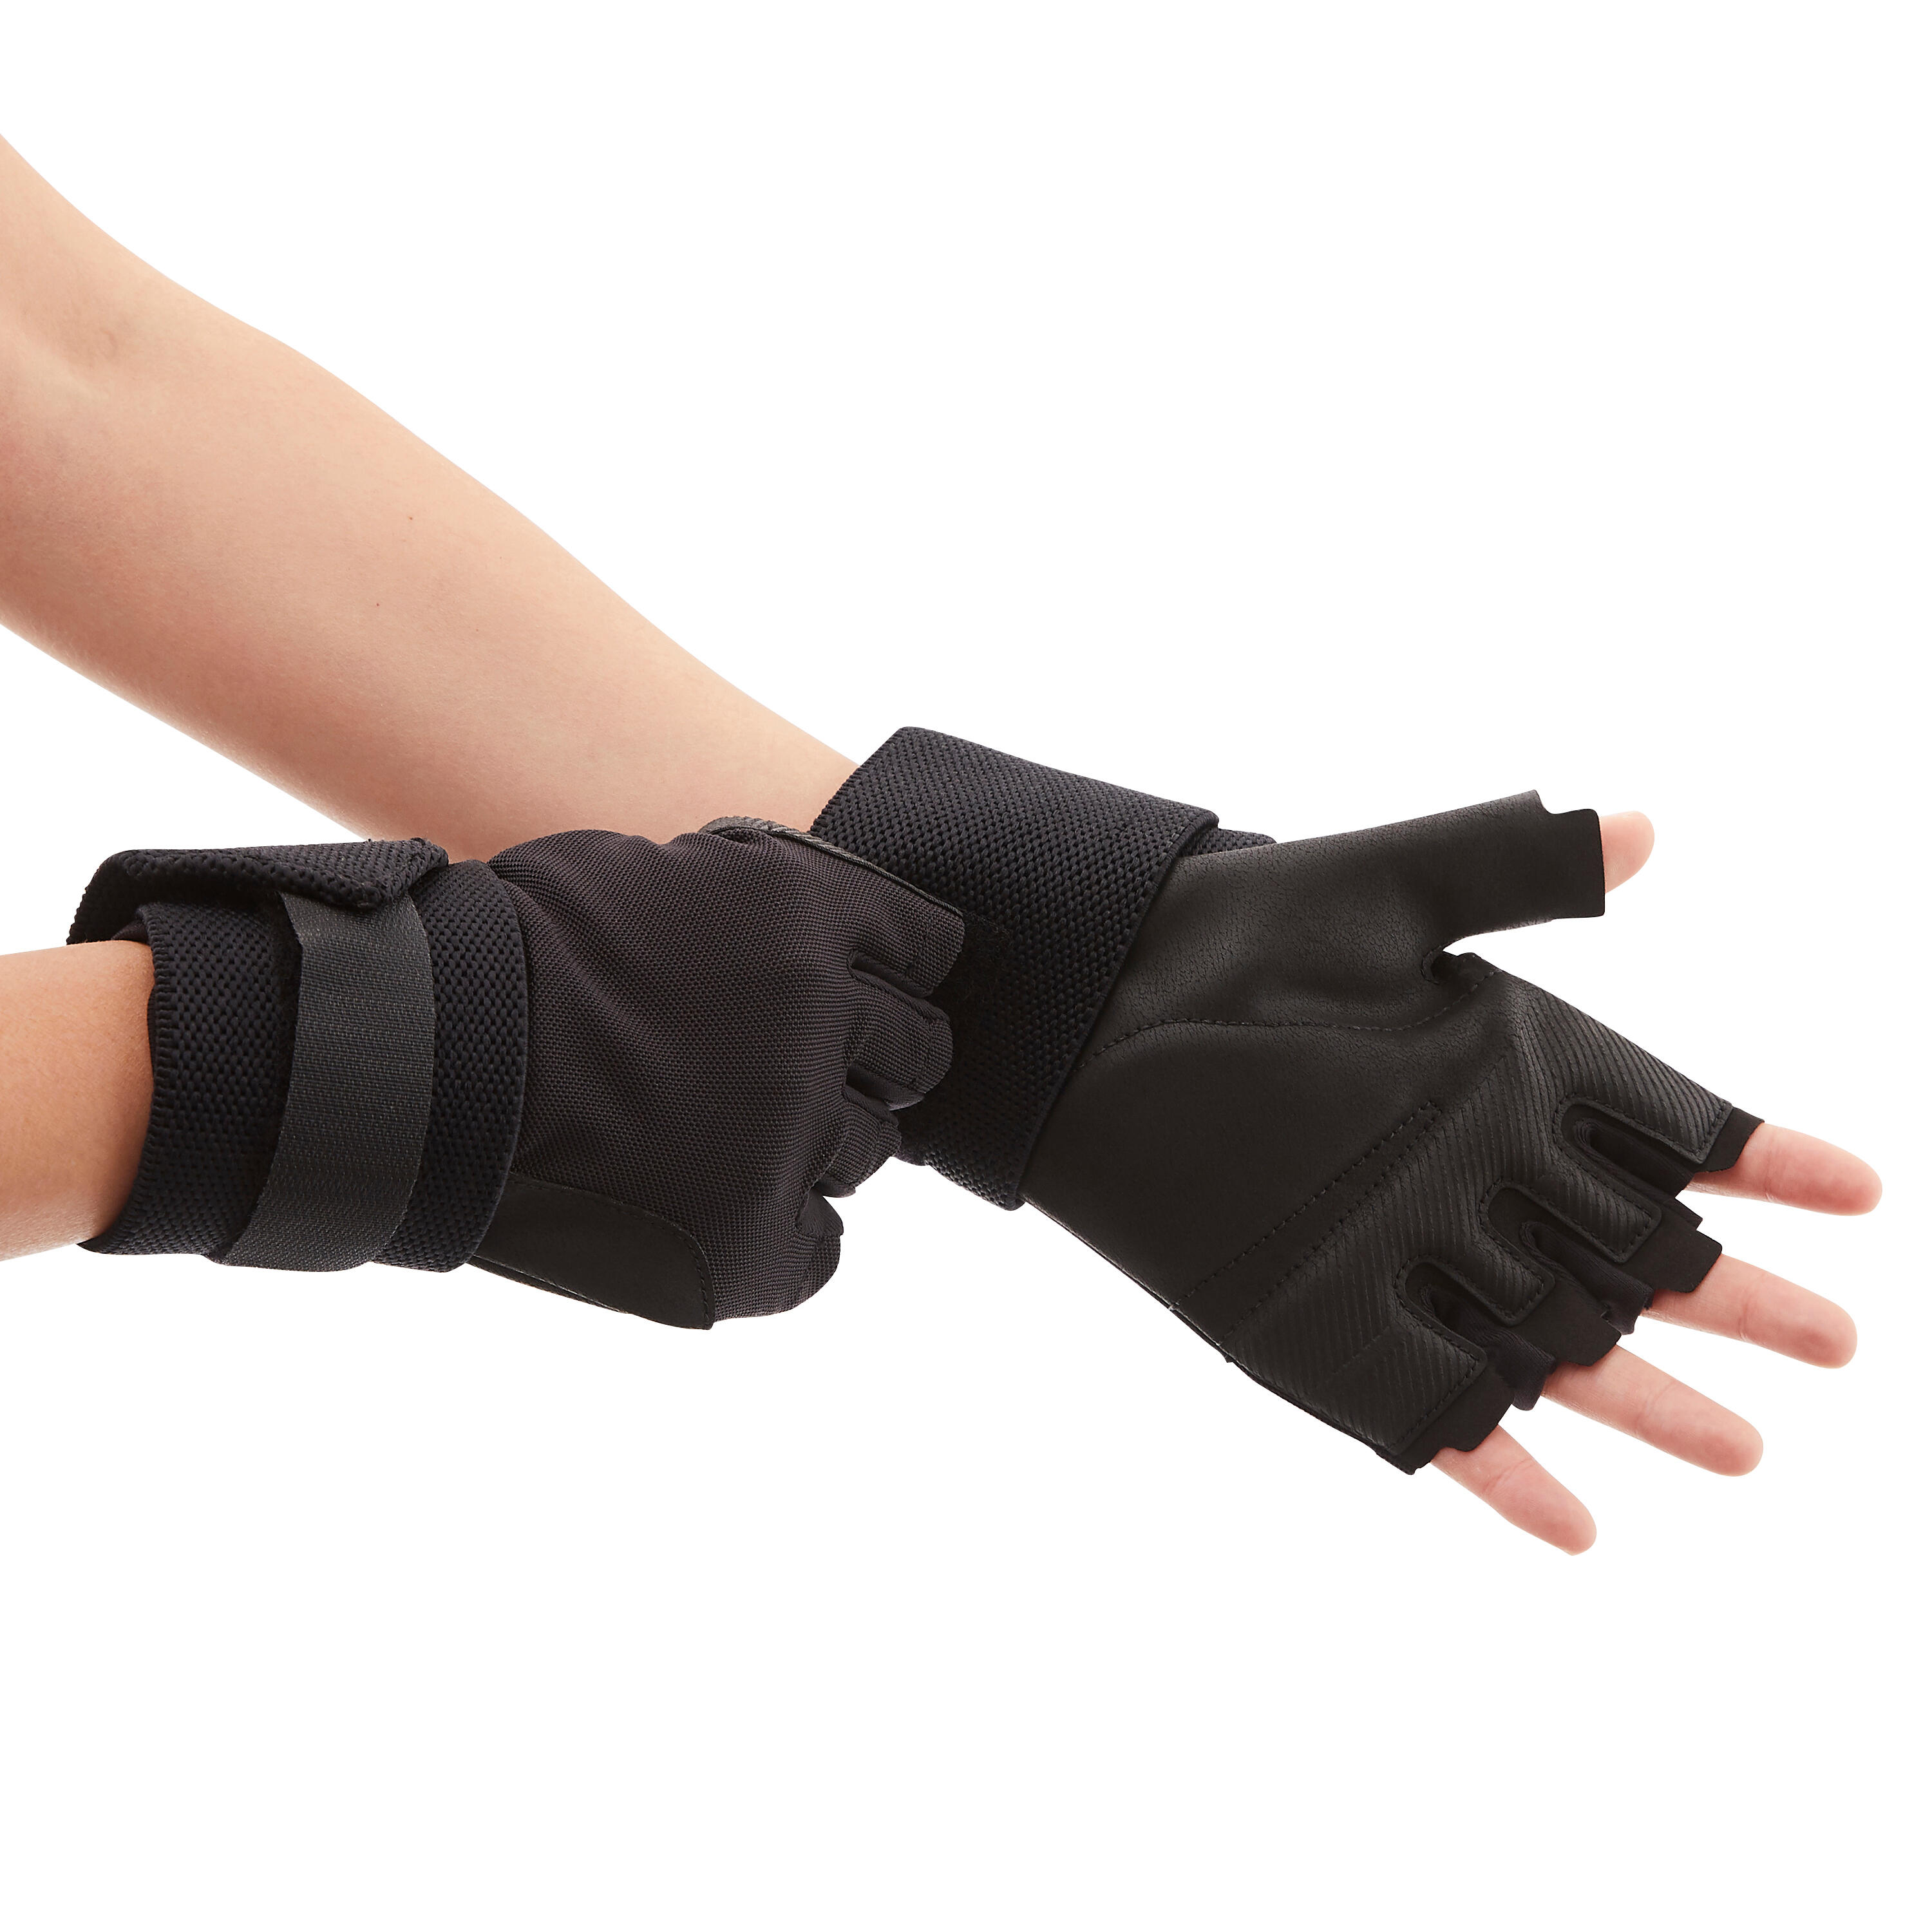 Comfort Weight Training Glove with Wrist Strap - Black 4/5